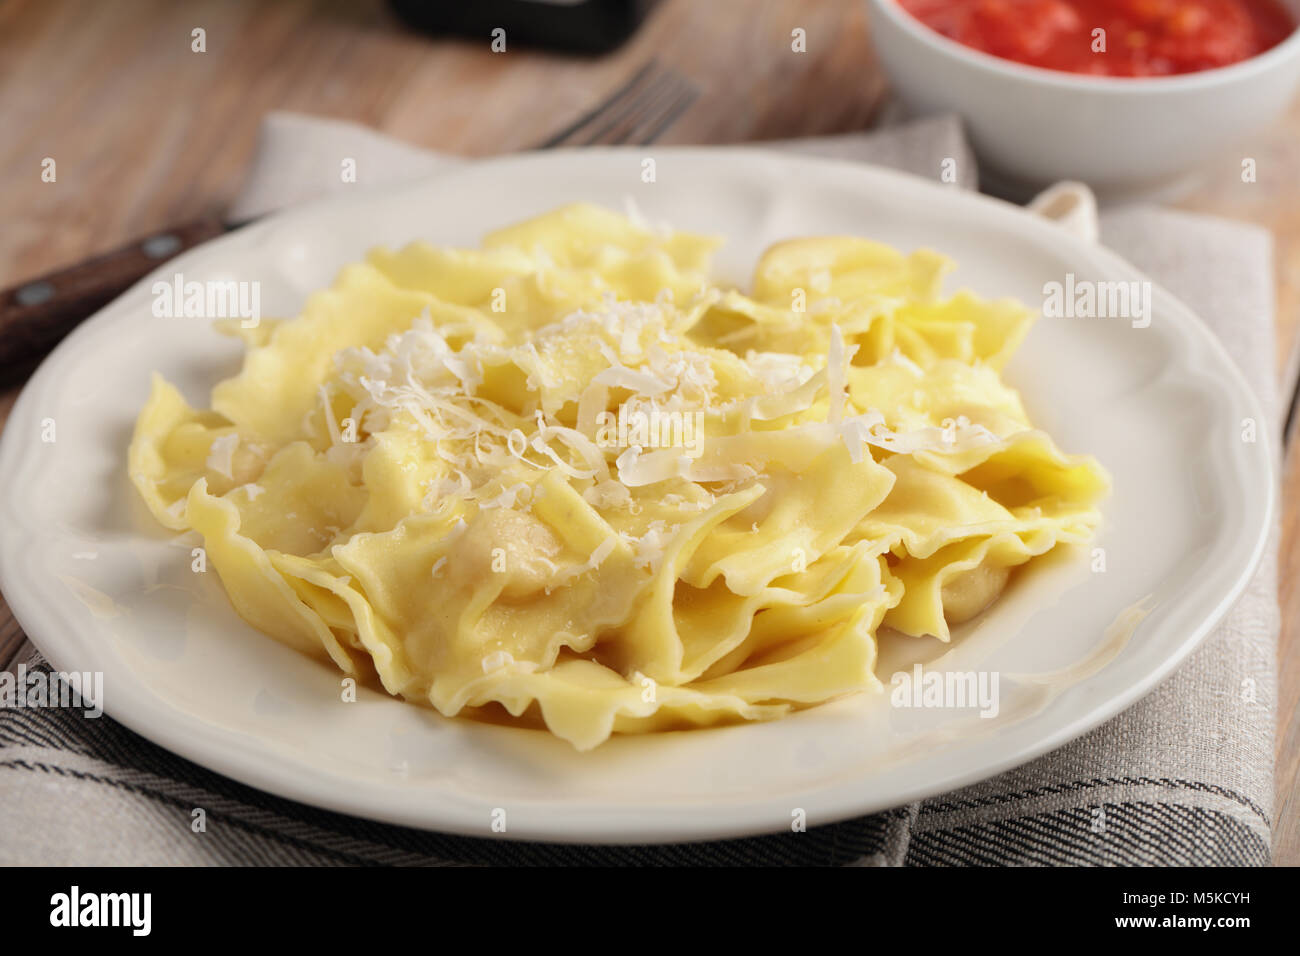 Italian ravioli with shredded Parmesan cheese and tomato sauce Stock Photo